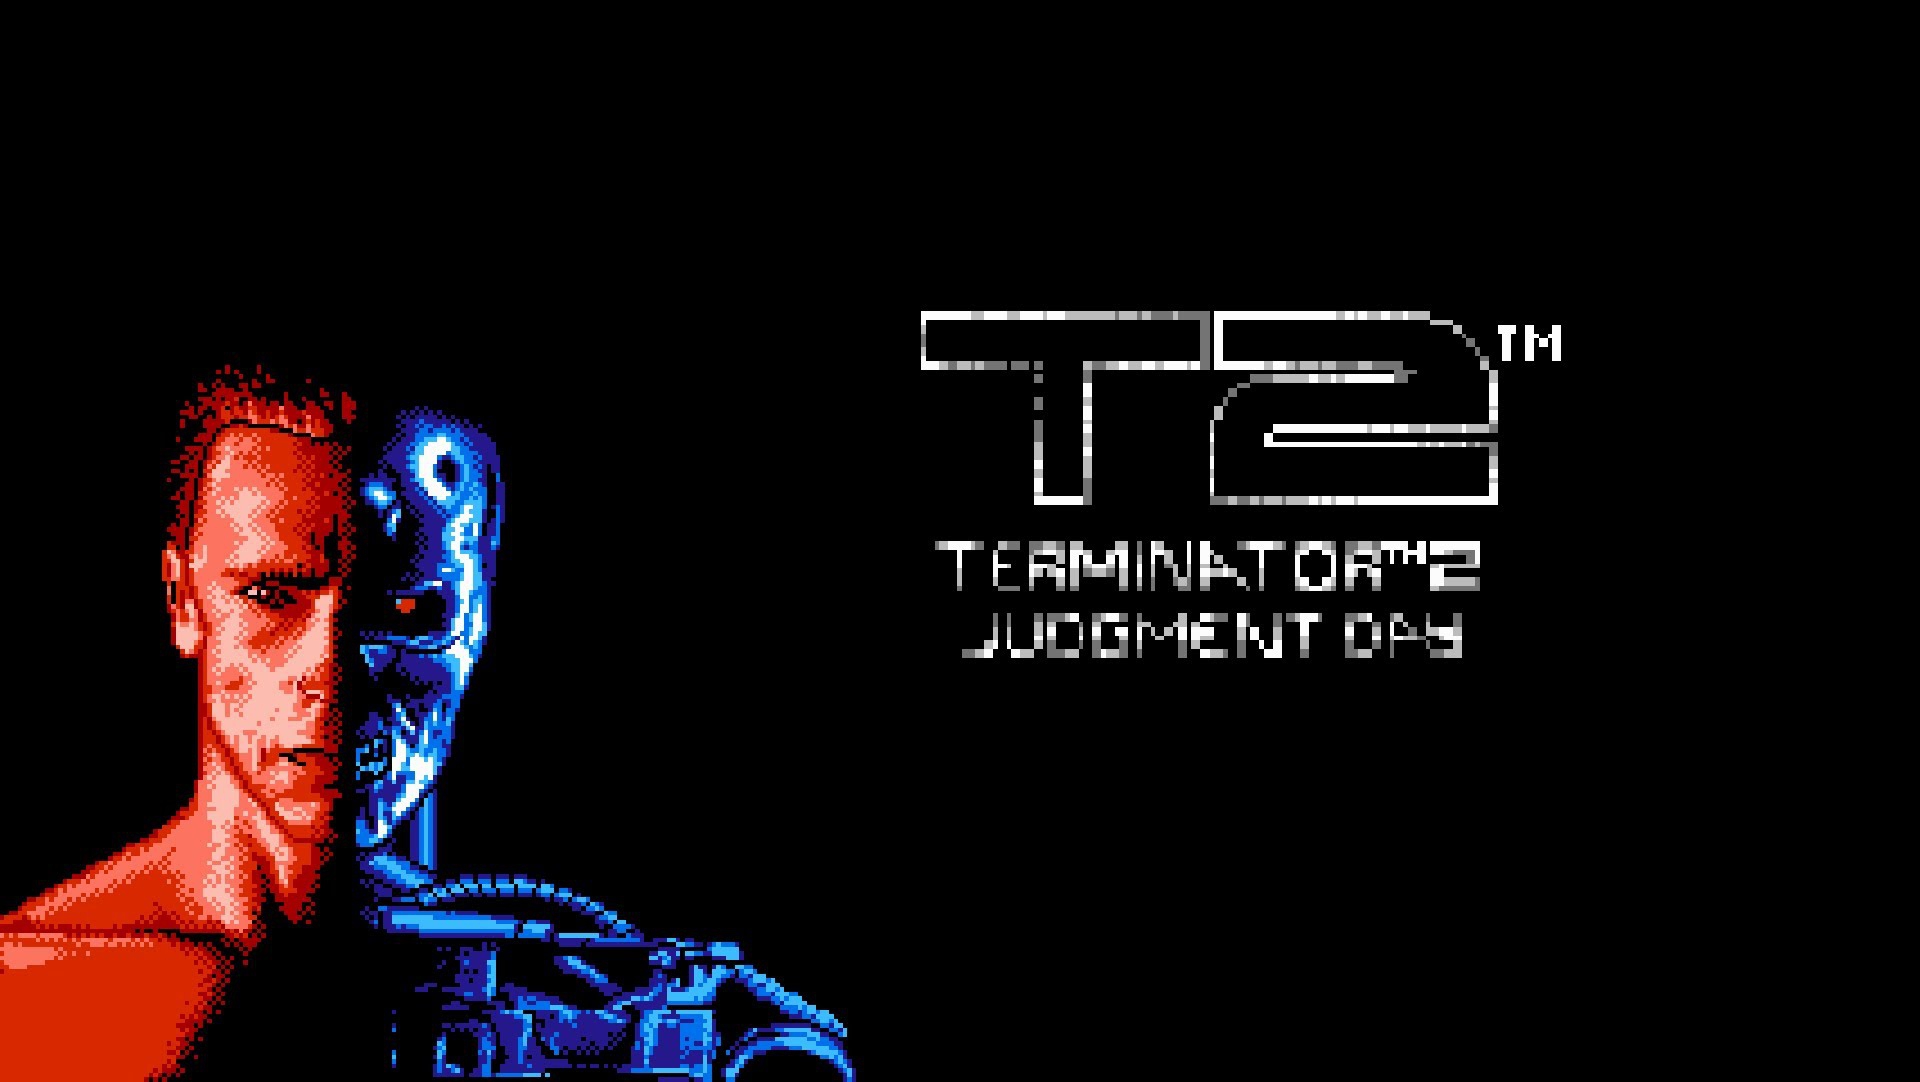 Terminator judgment day игра. Терминатор 2 игра на Денди. Terminator 2 NES картридж. Игра Терминатор 2 на Дэнди. Обложки игр NES Terminator 2.